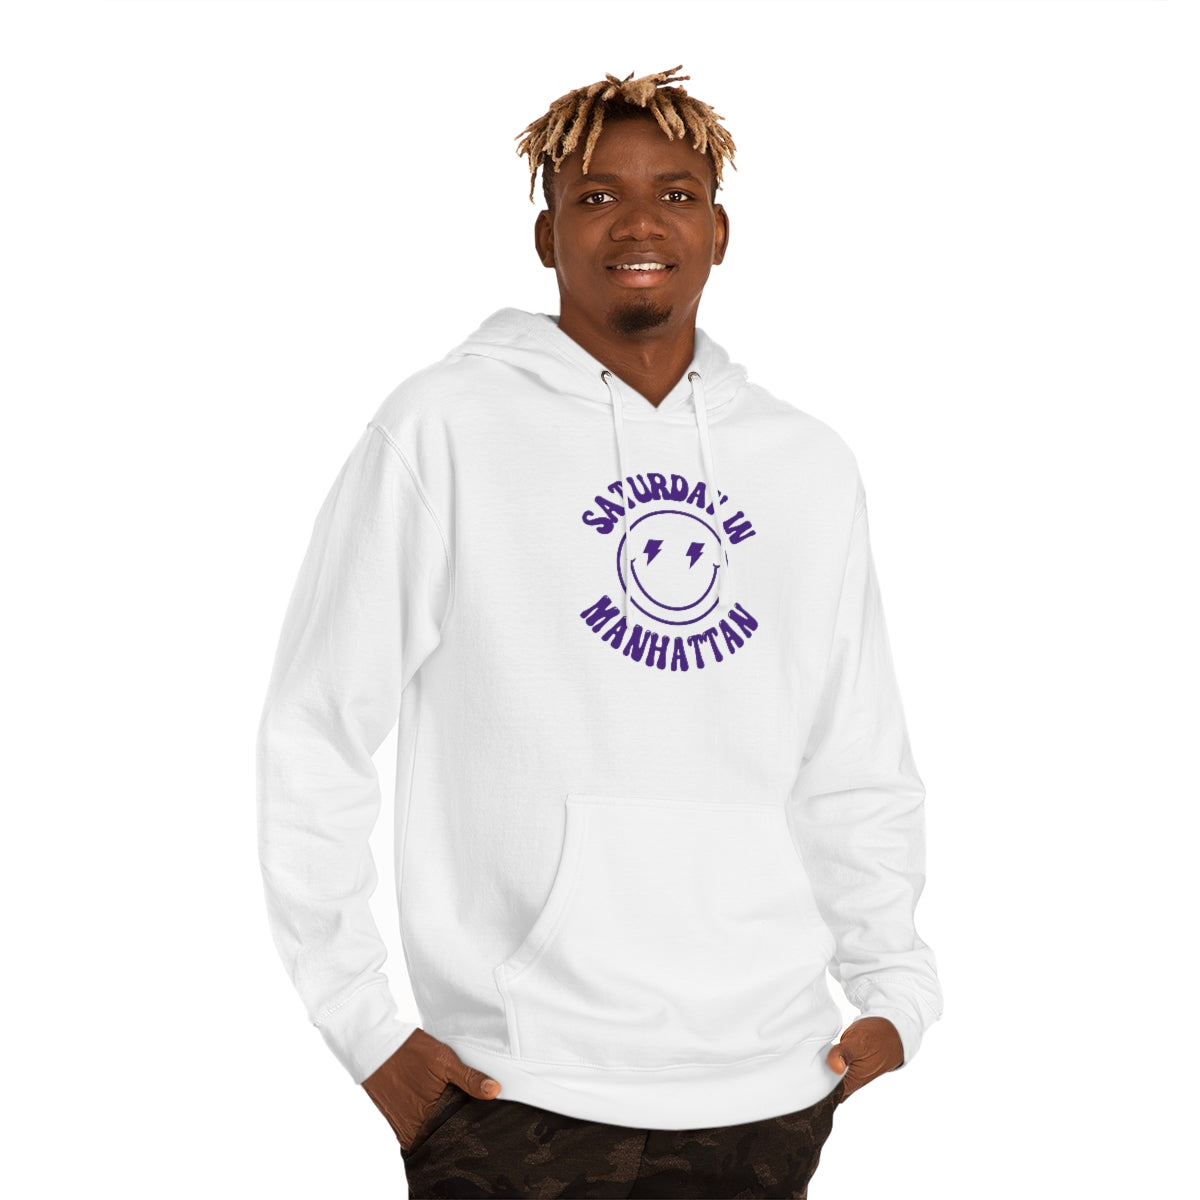 Smiley Manhattan Hooded Sweatshirt - GG - ITC